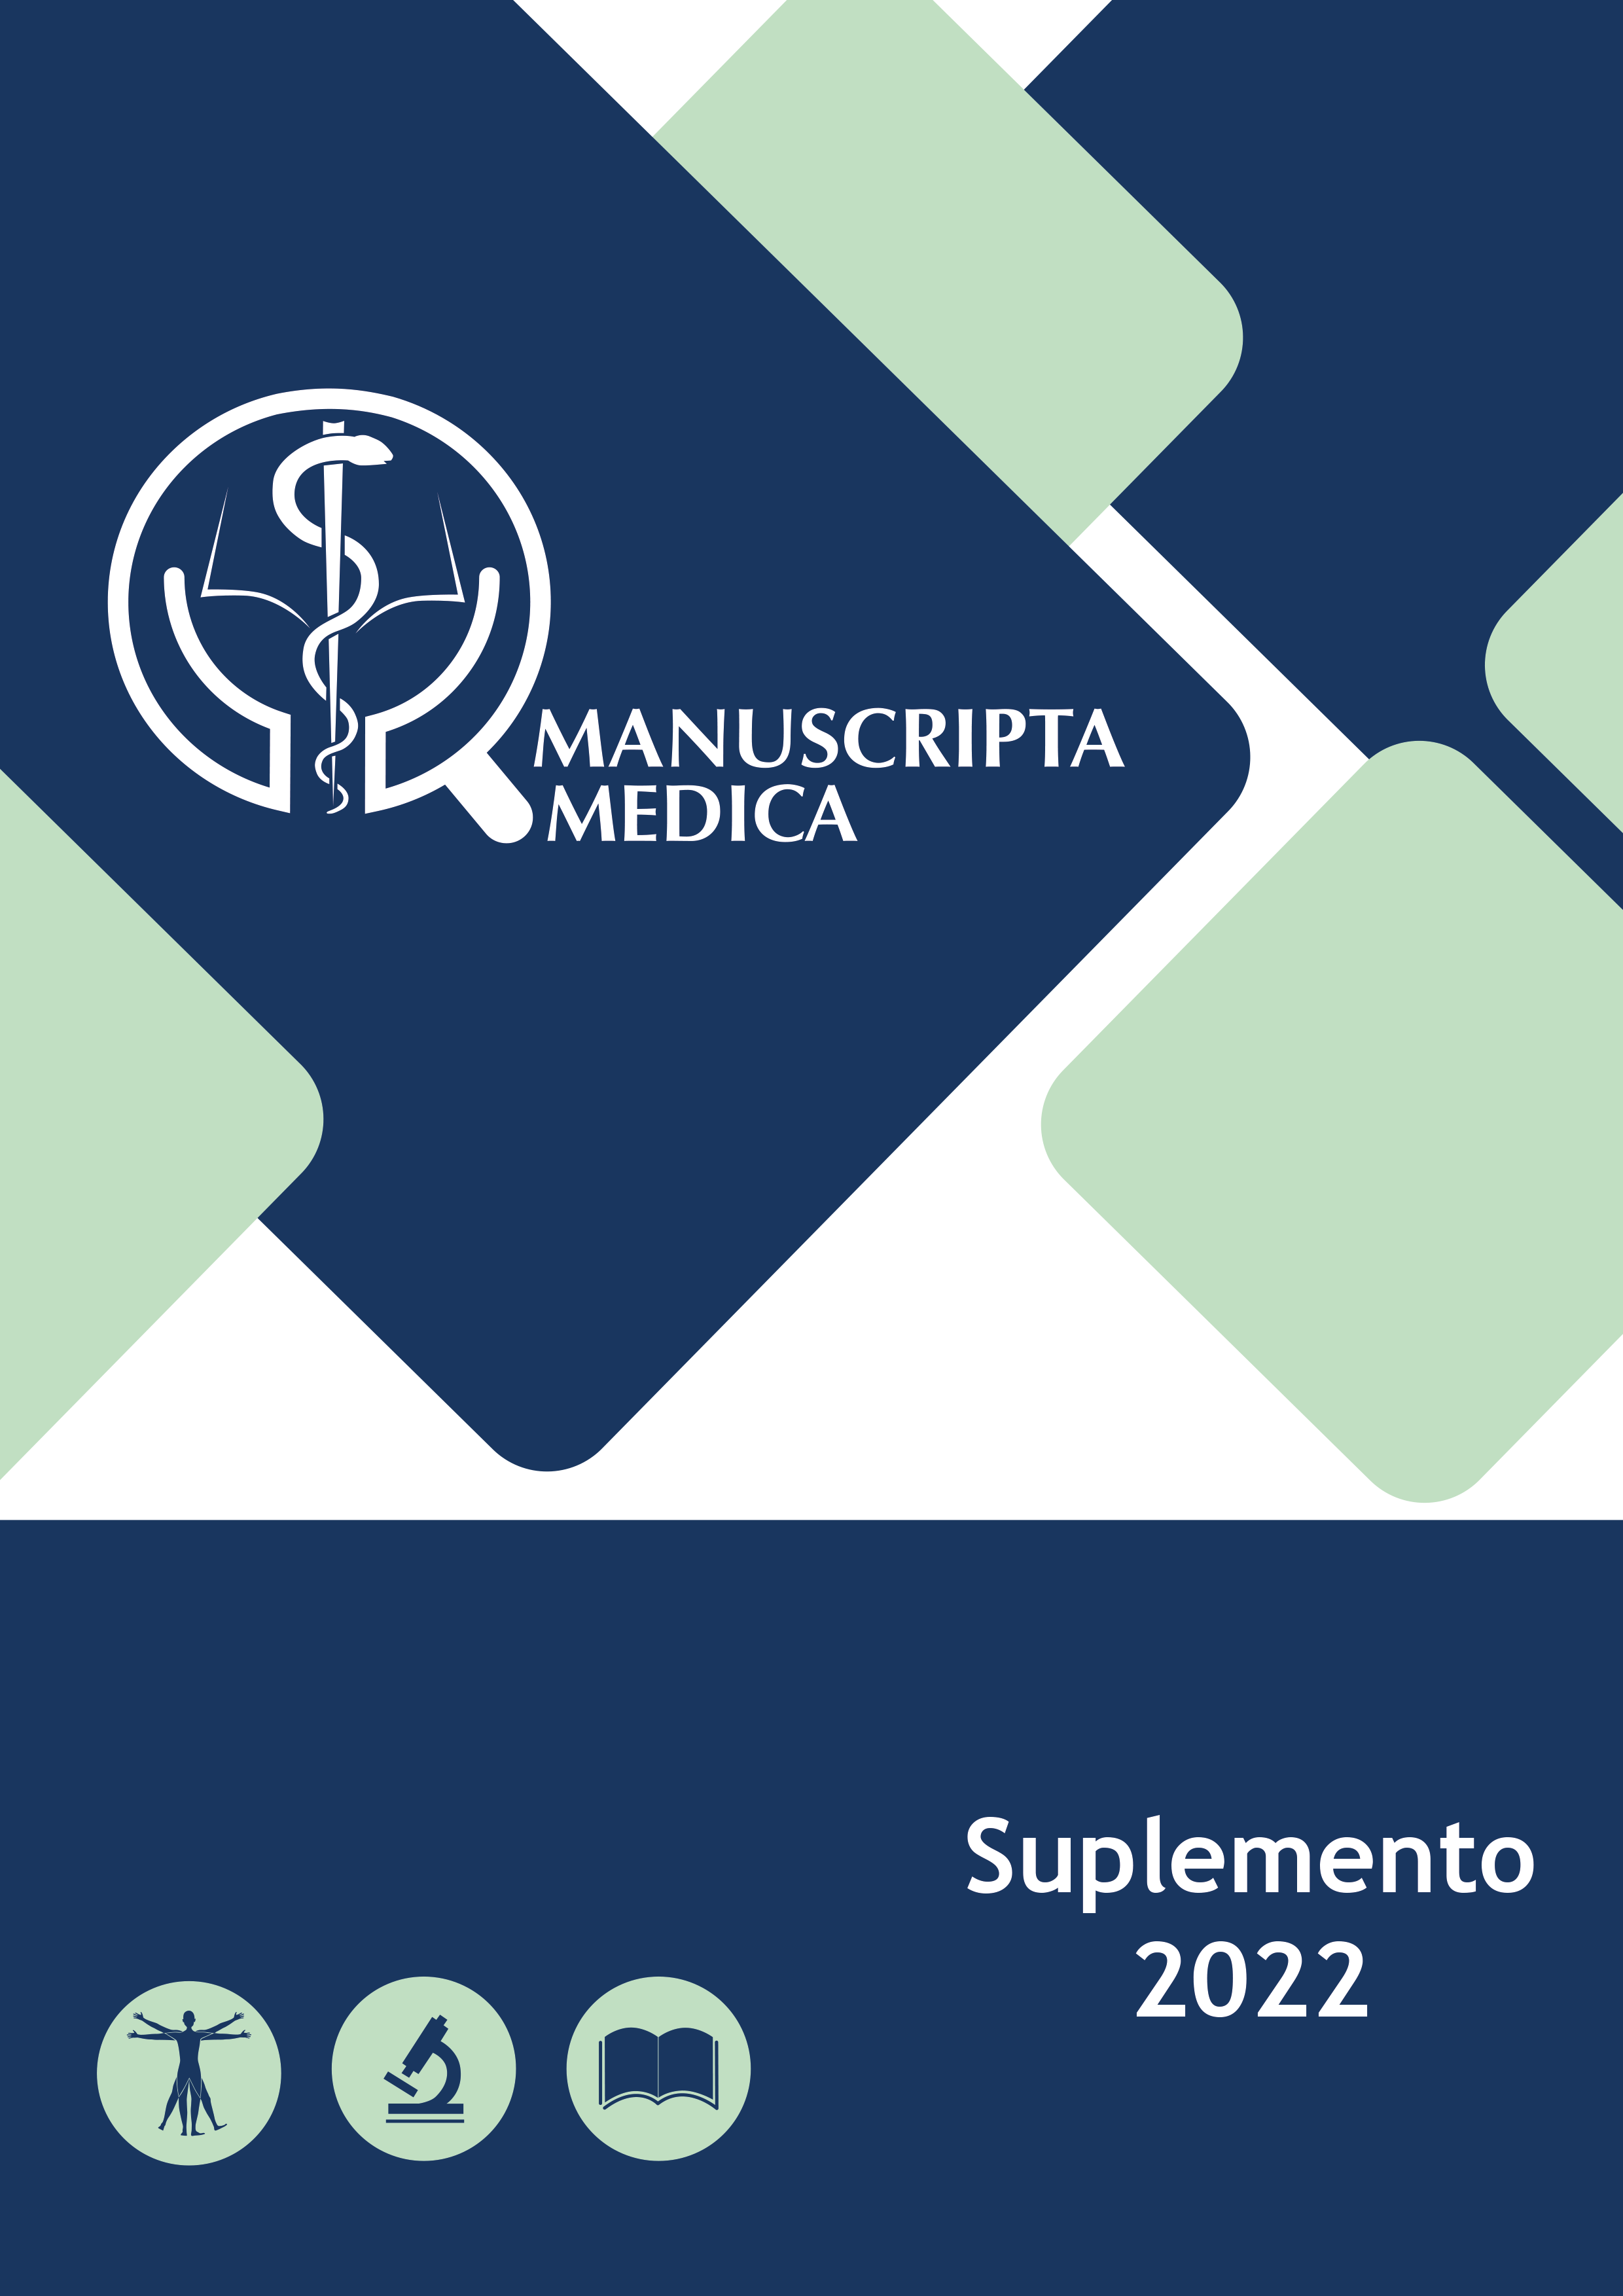 					Ver 2022: Suplemento Manuscripta Medica
				